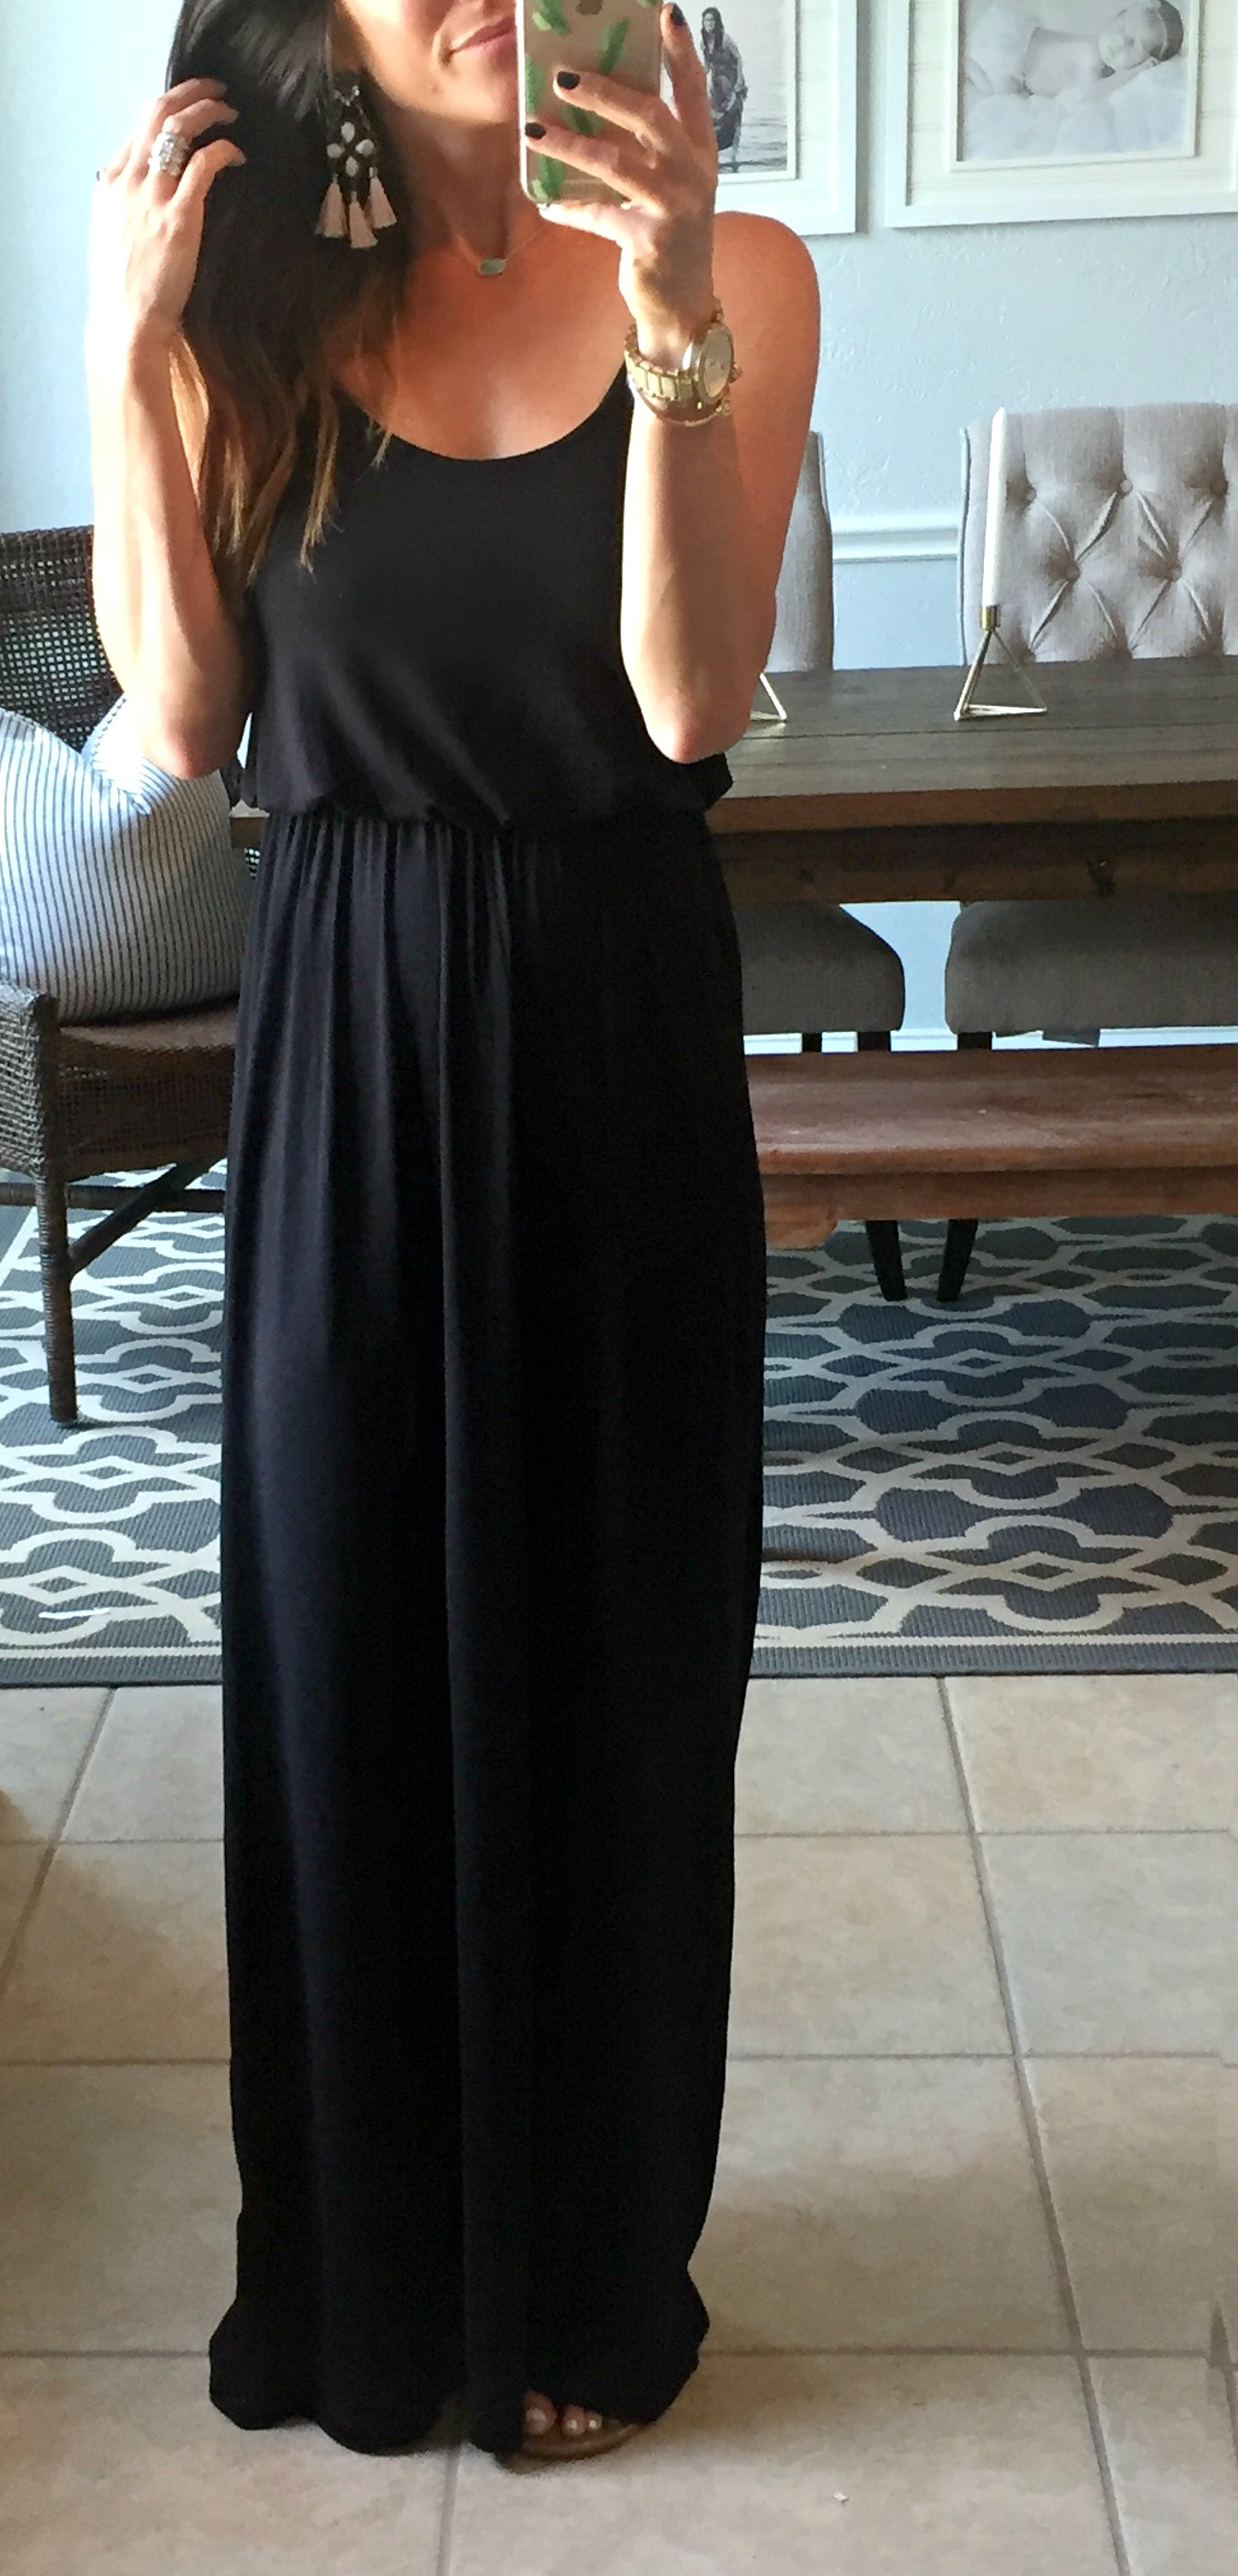 How to wear one black dress 12 ways #justpostedblog #ShopStyle